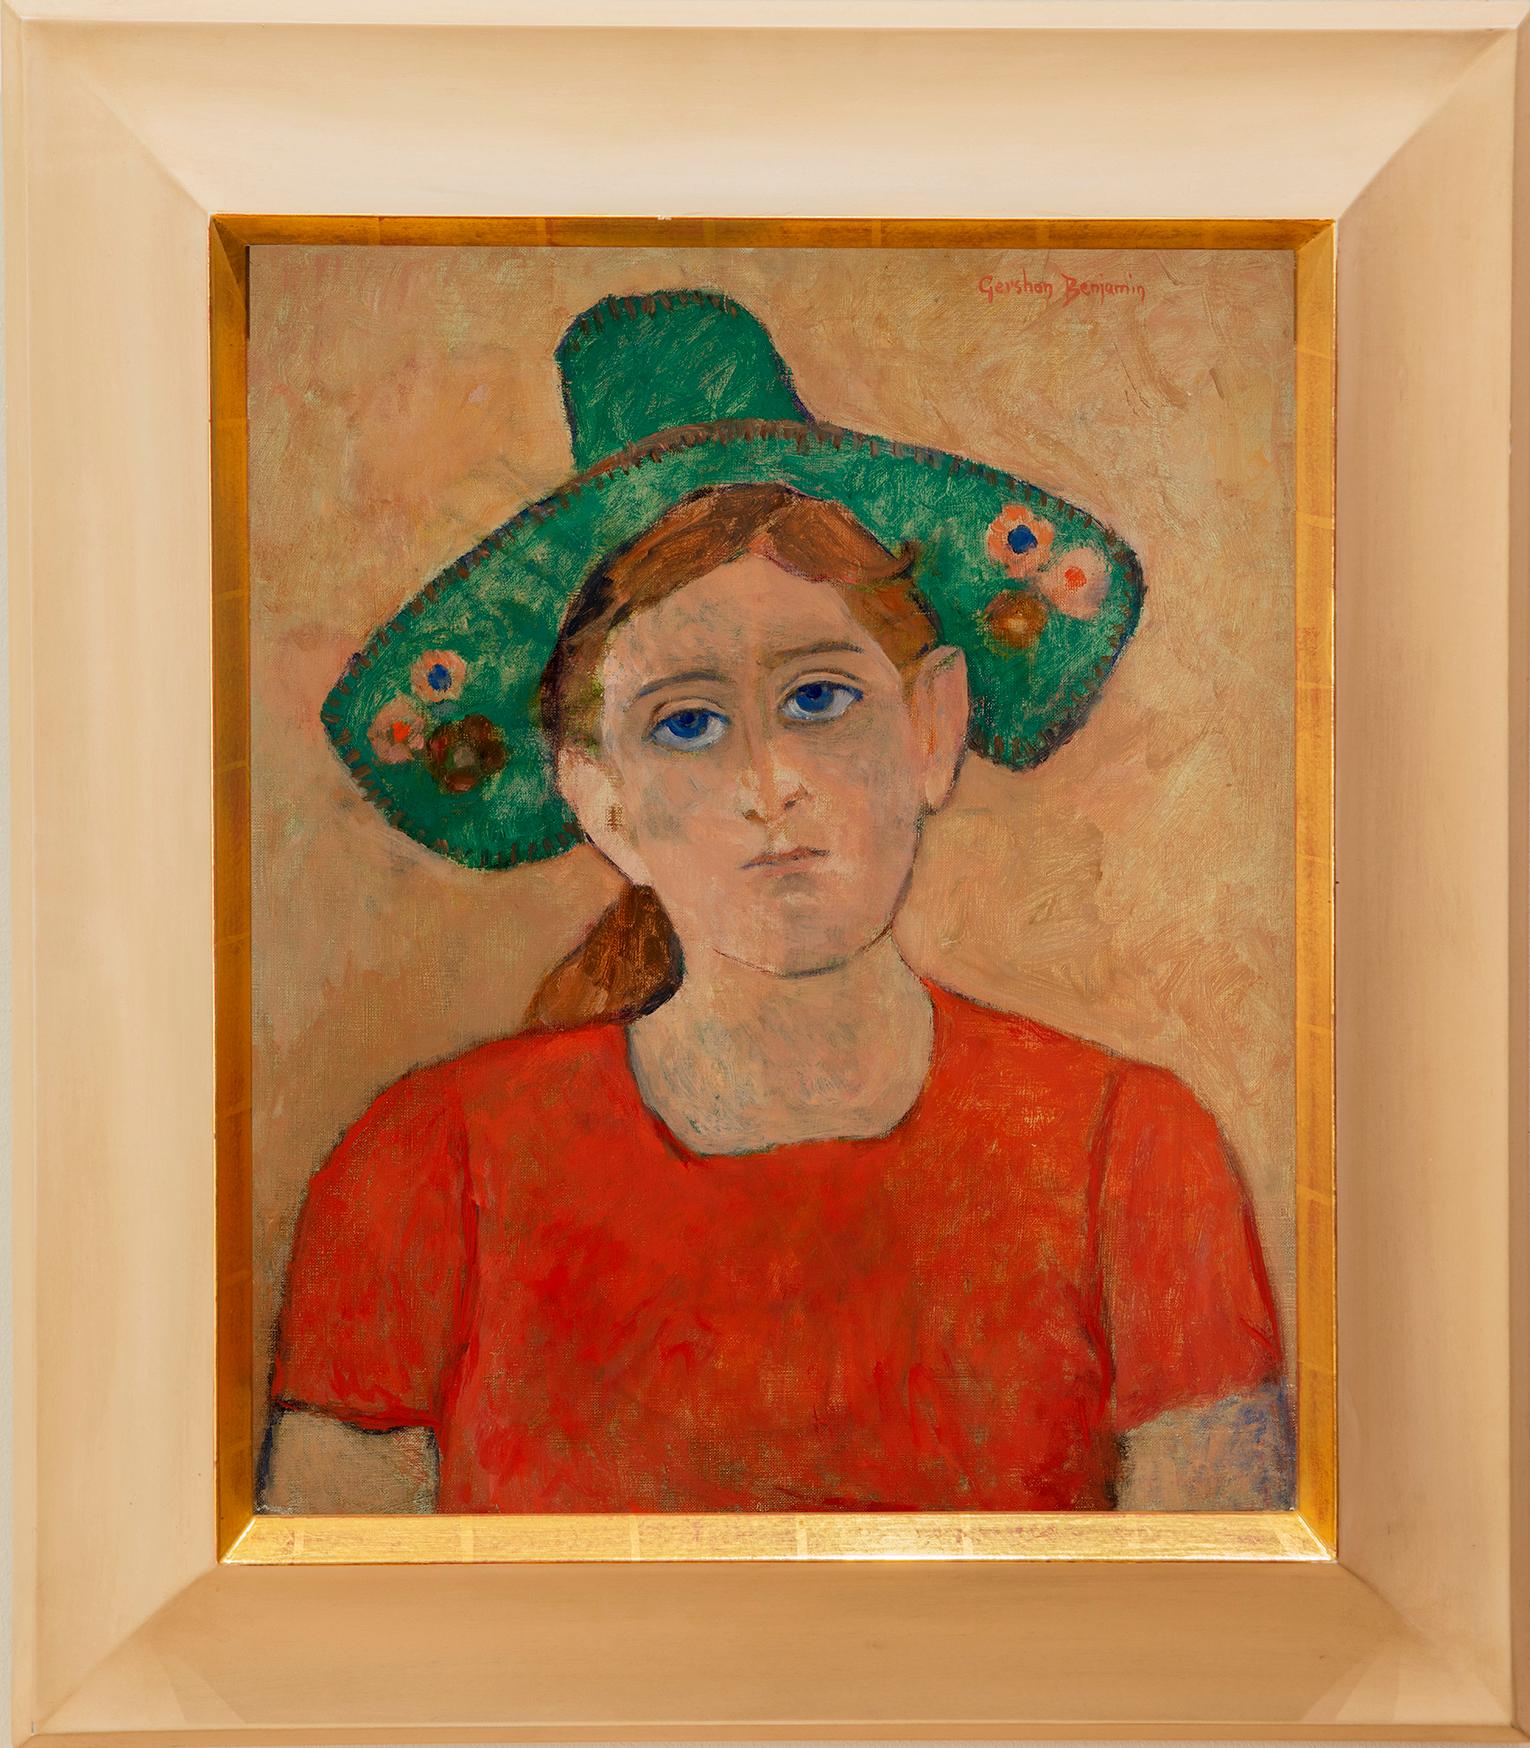 Gershon Benjamin Figurative Painting - "Green Hat"